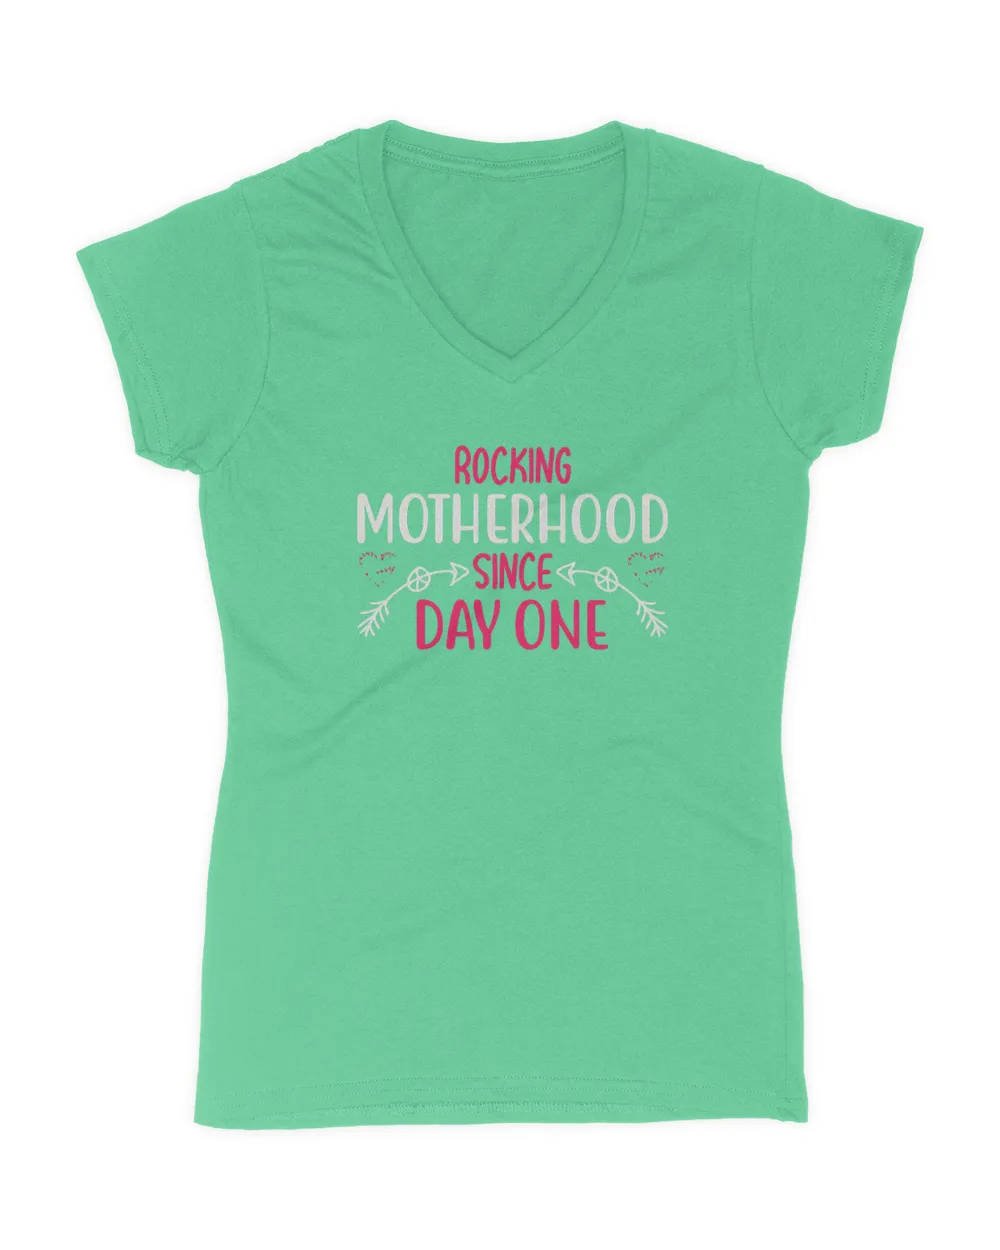 Rocking motherhood since day one tee t shirt